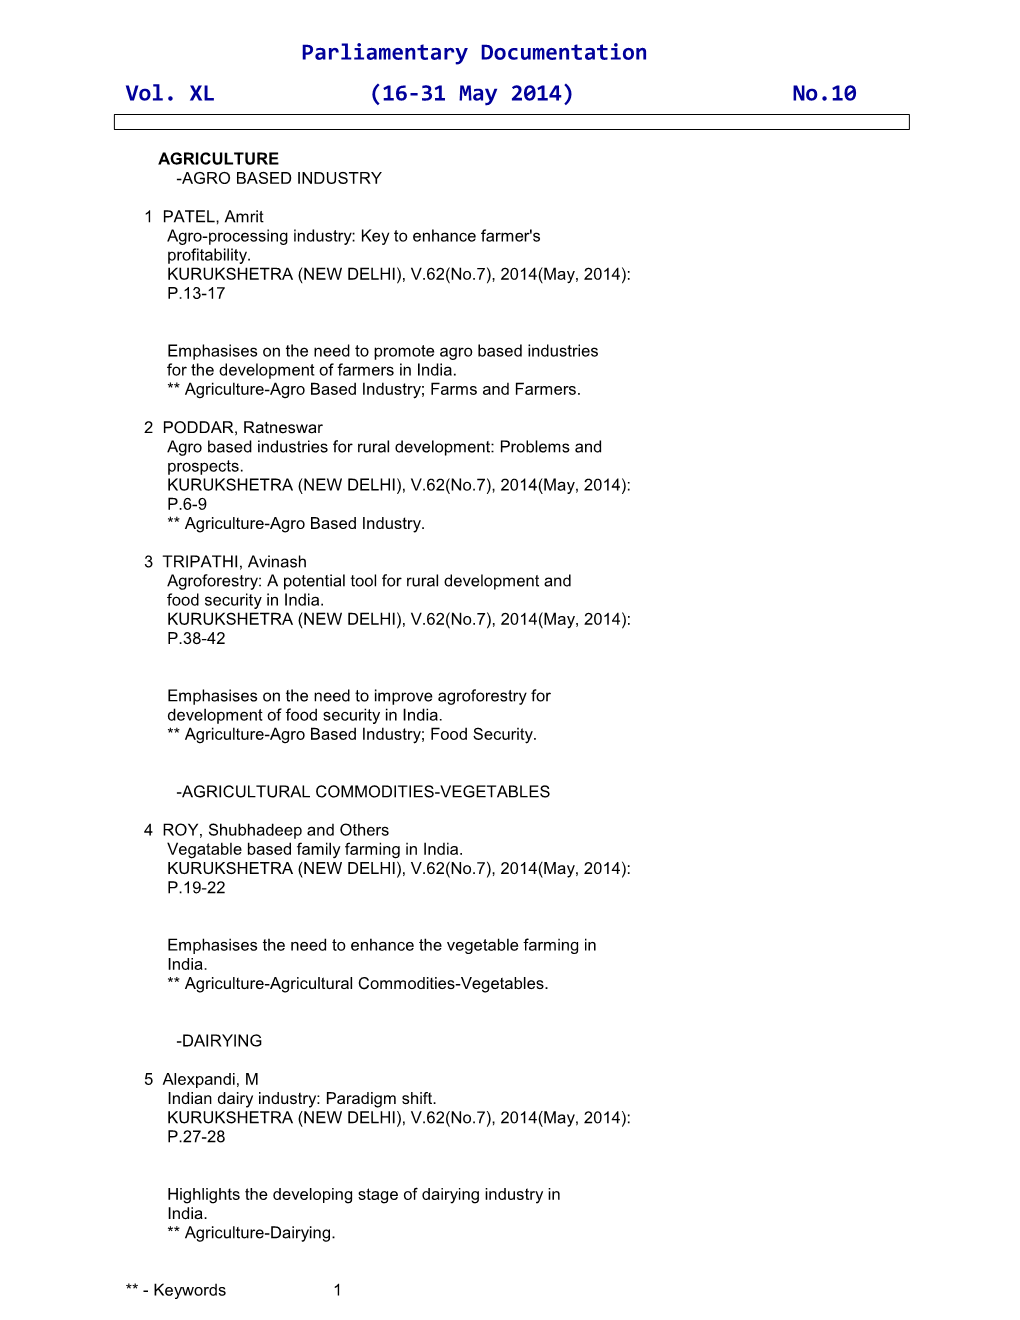 Parliamentary Documentation Vol. XL (16-31 May 2014) No.10